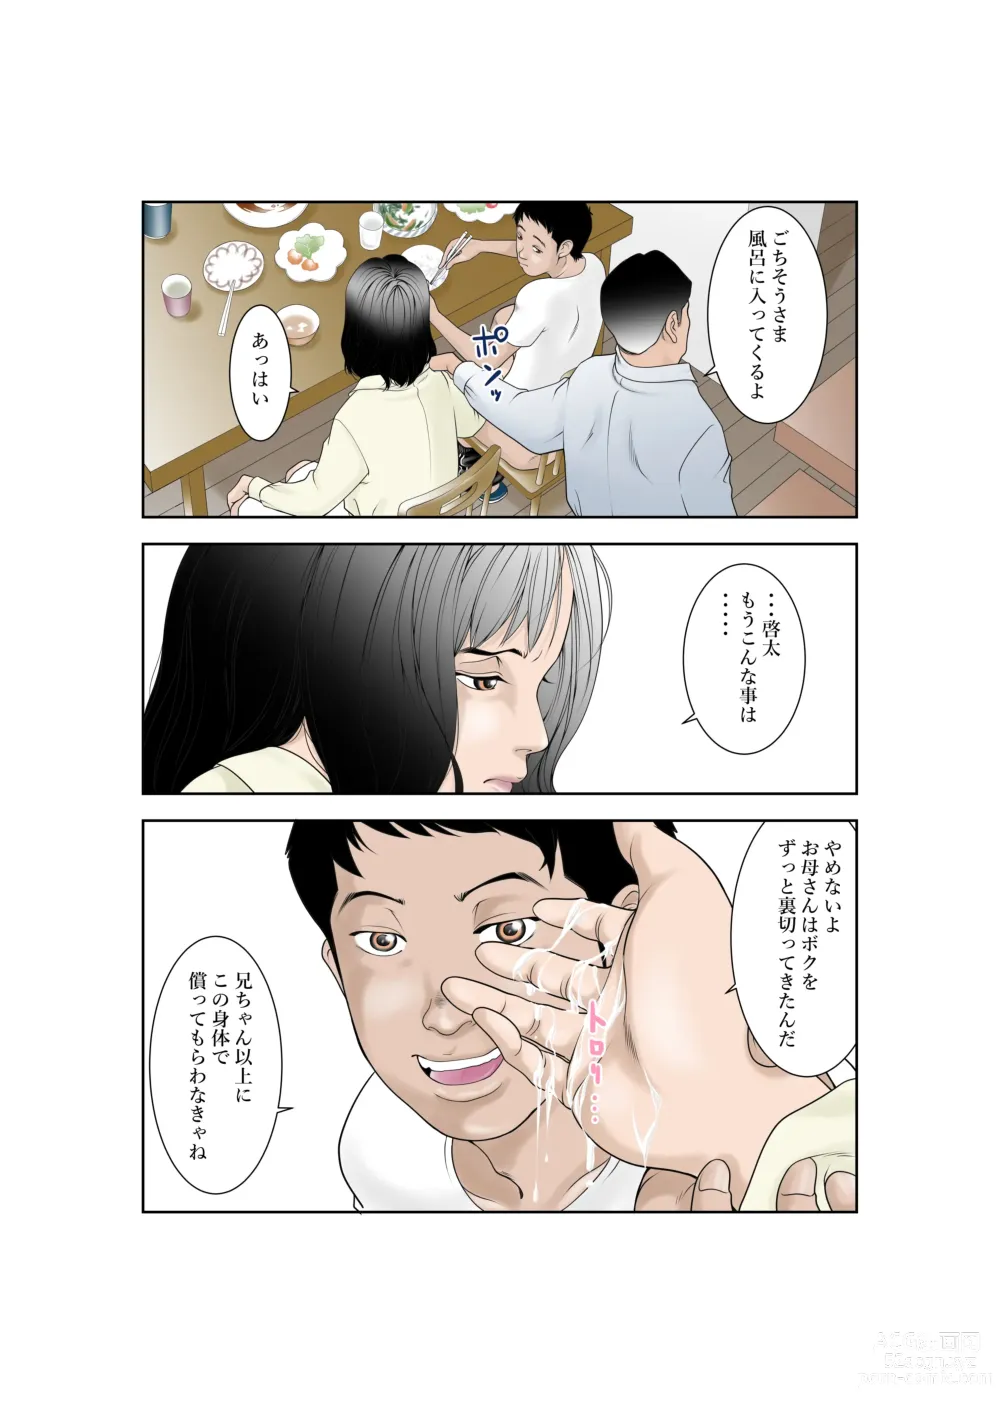 Page 32 of doujinshi Shiawase Kazoku no Sodate kata